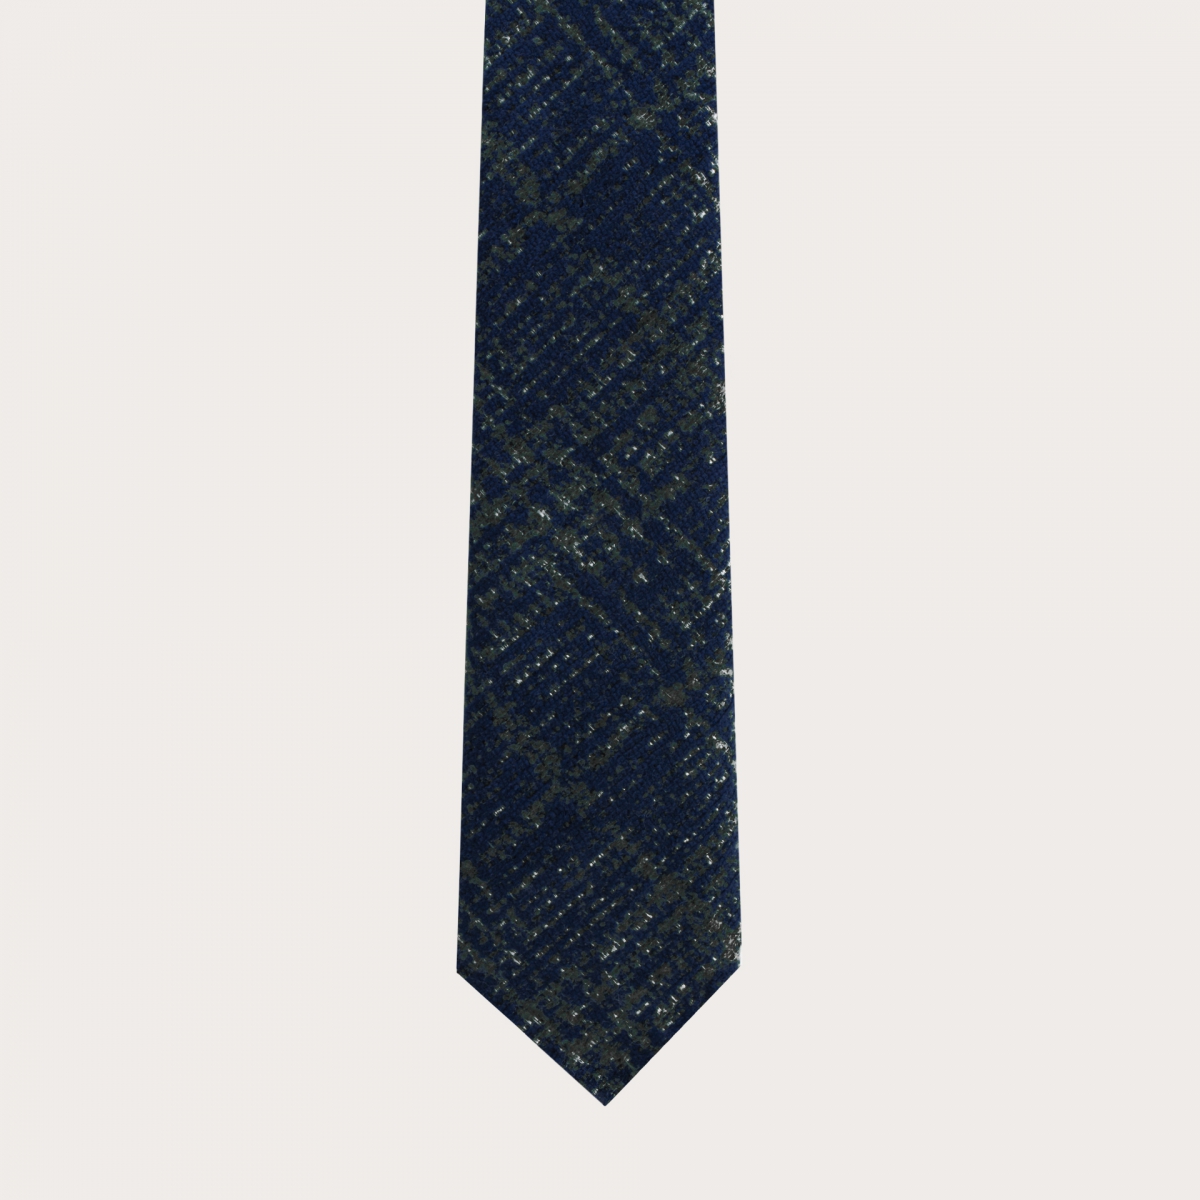 Cravatta sfoderata in lana e seta, tartan blu e verde